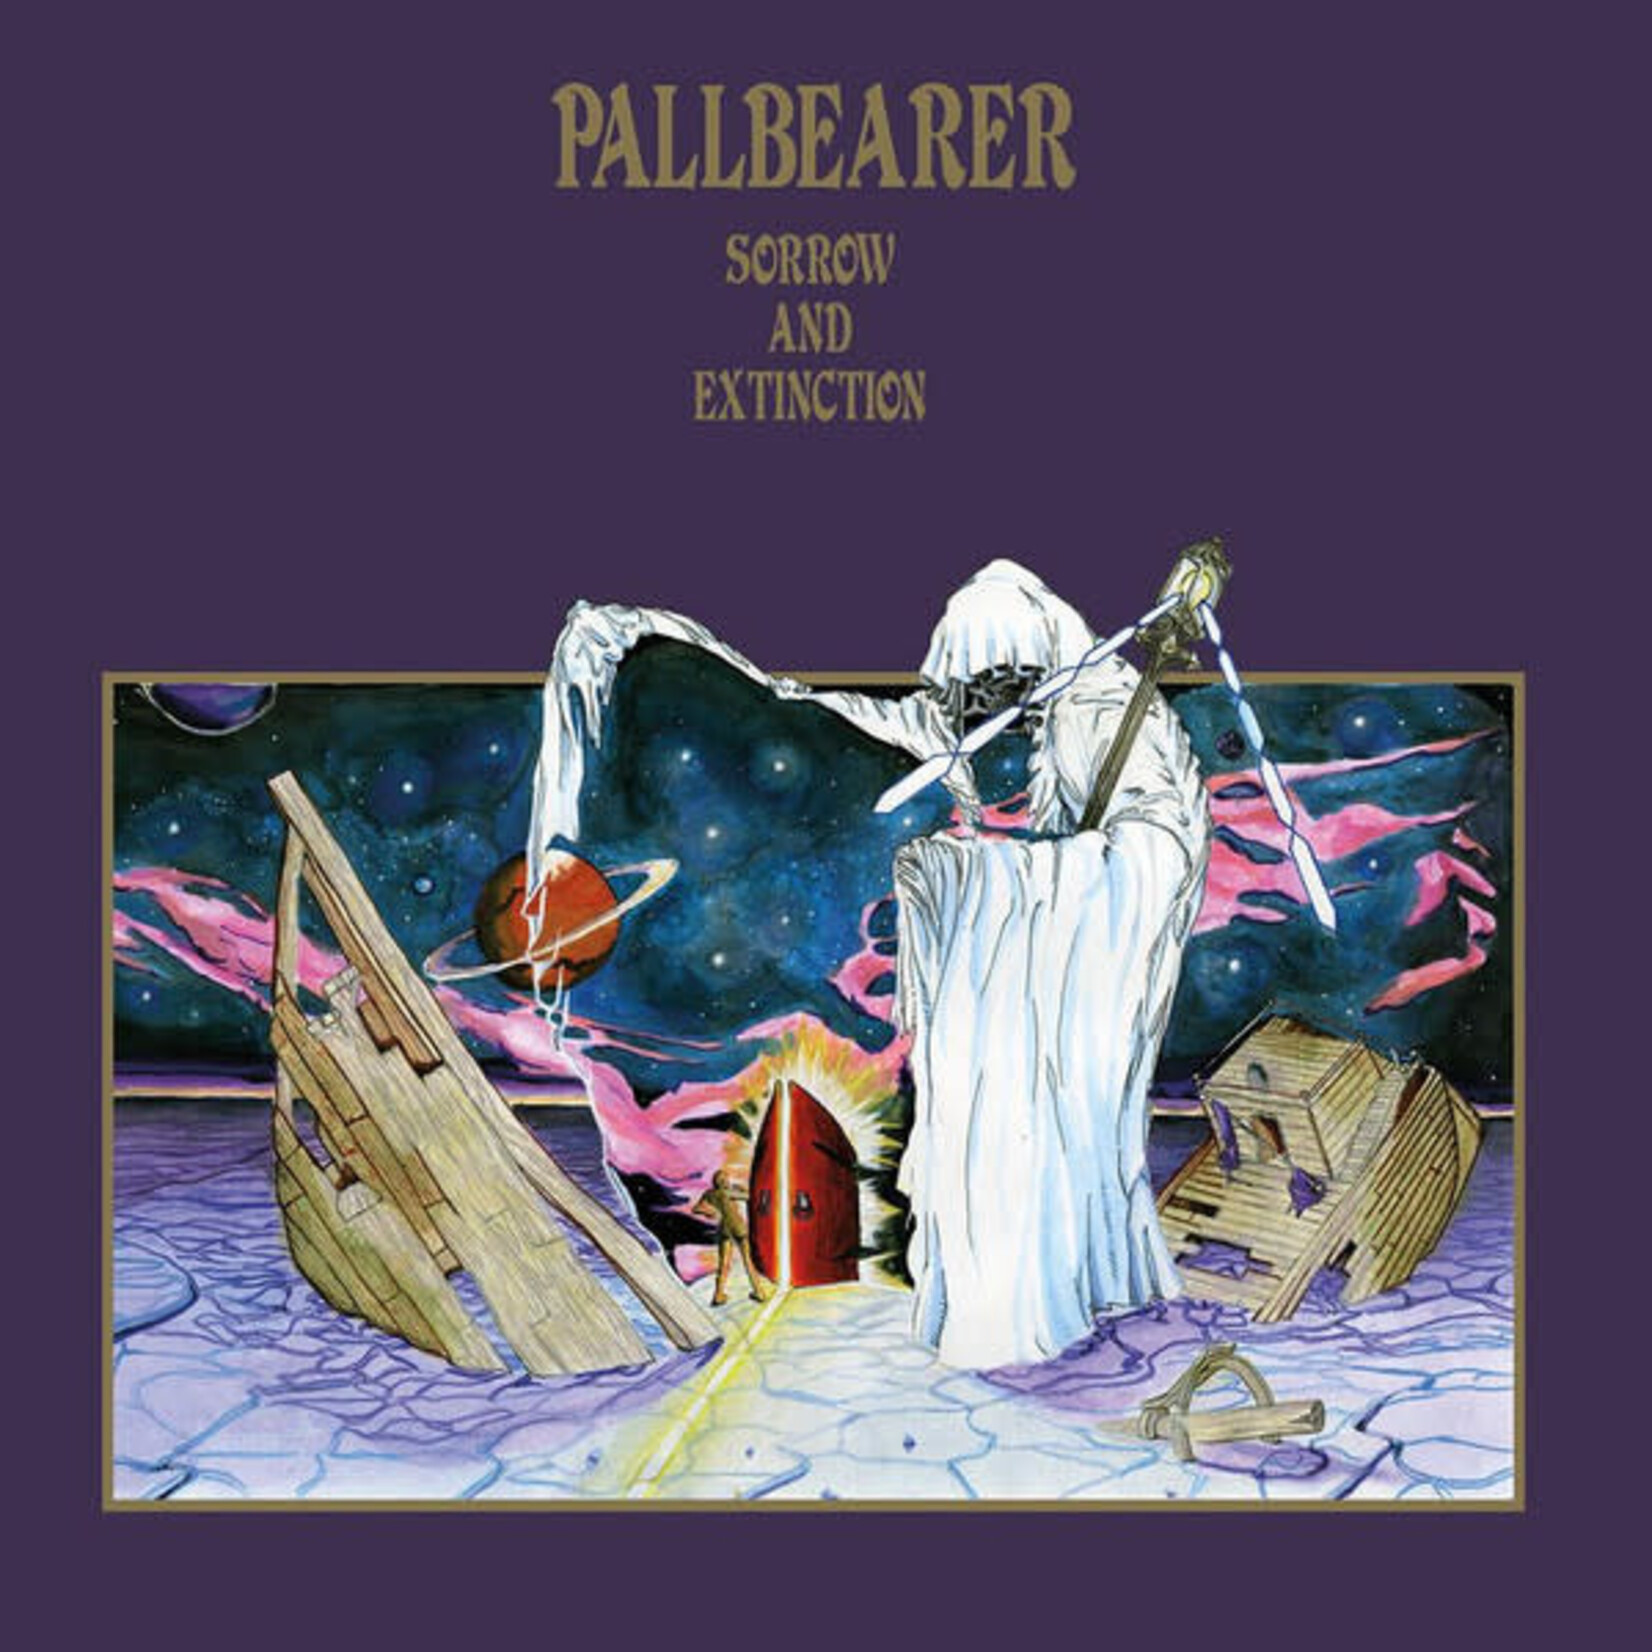 20 Buck Spin Pallbearer - Sorrow And Extinction (2LP) [Splatter]